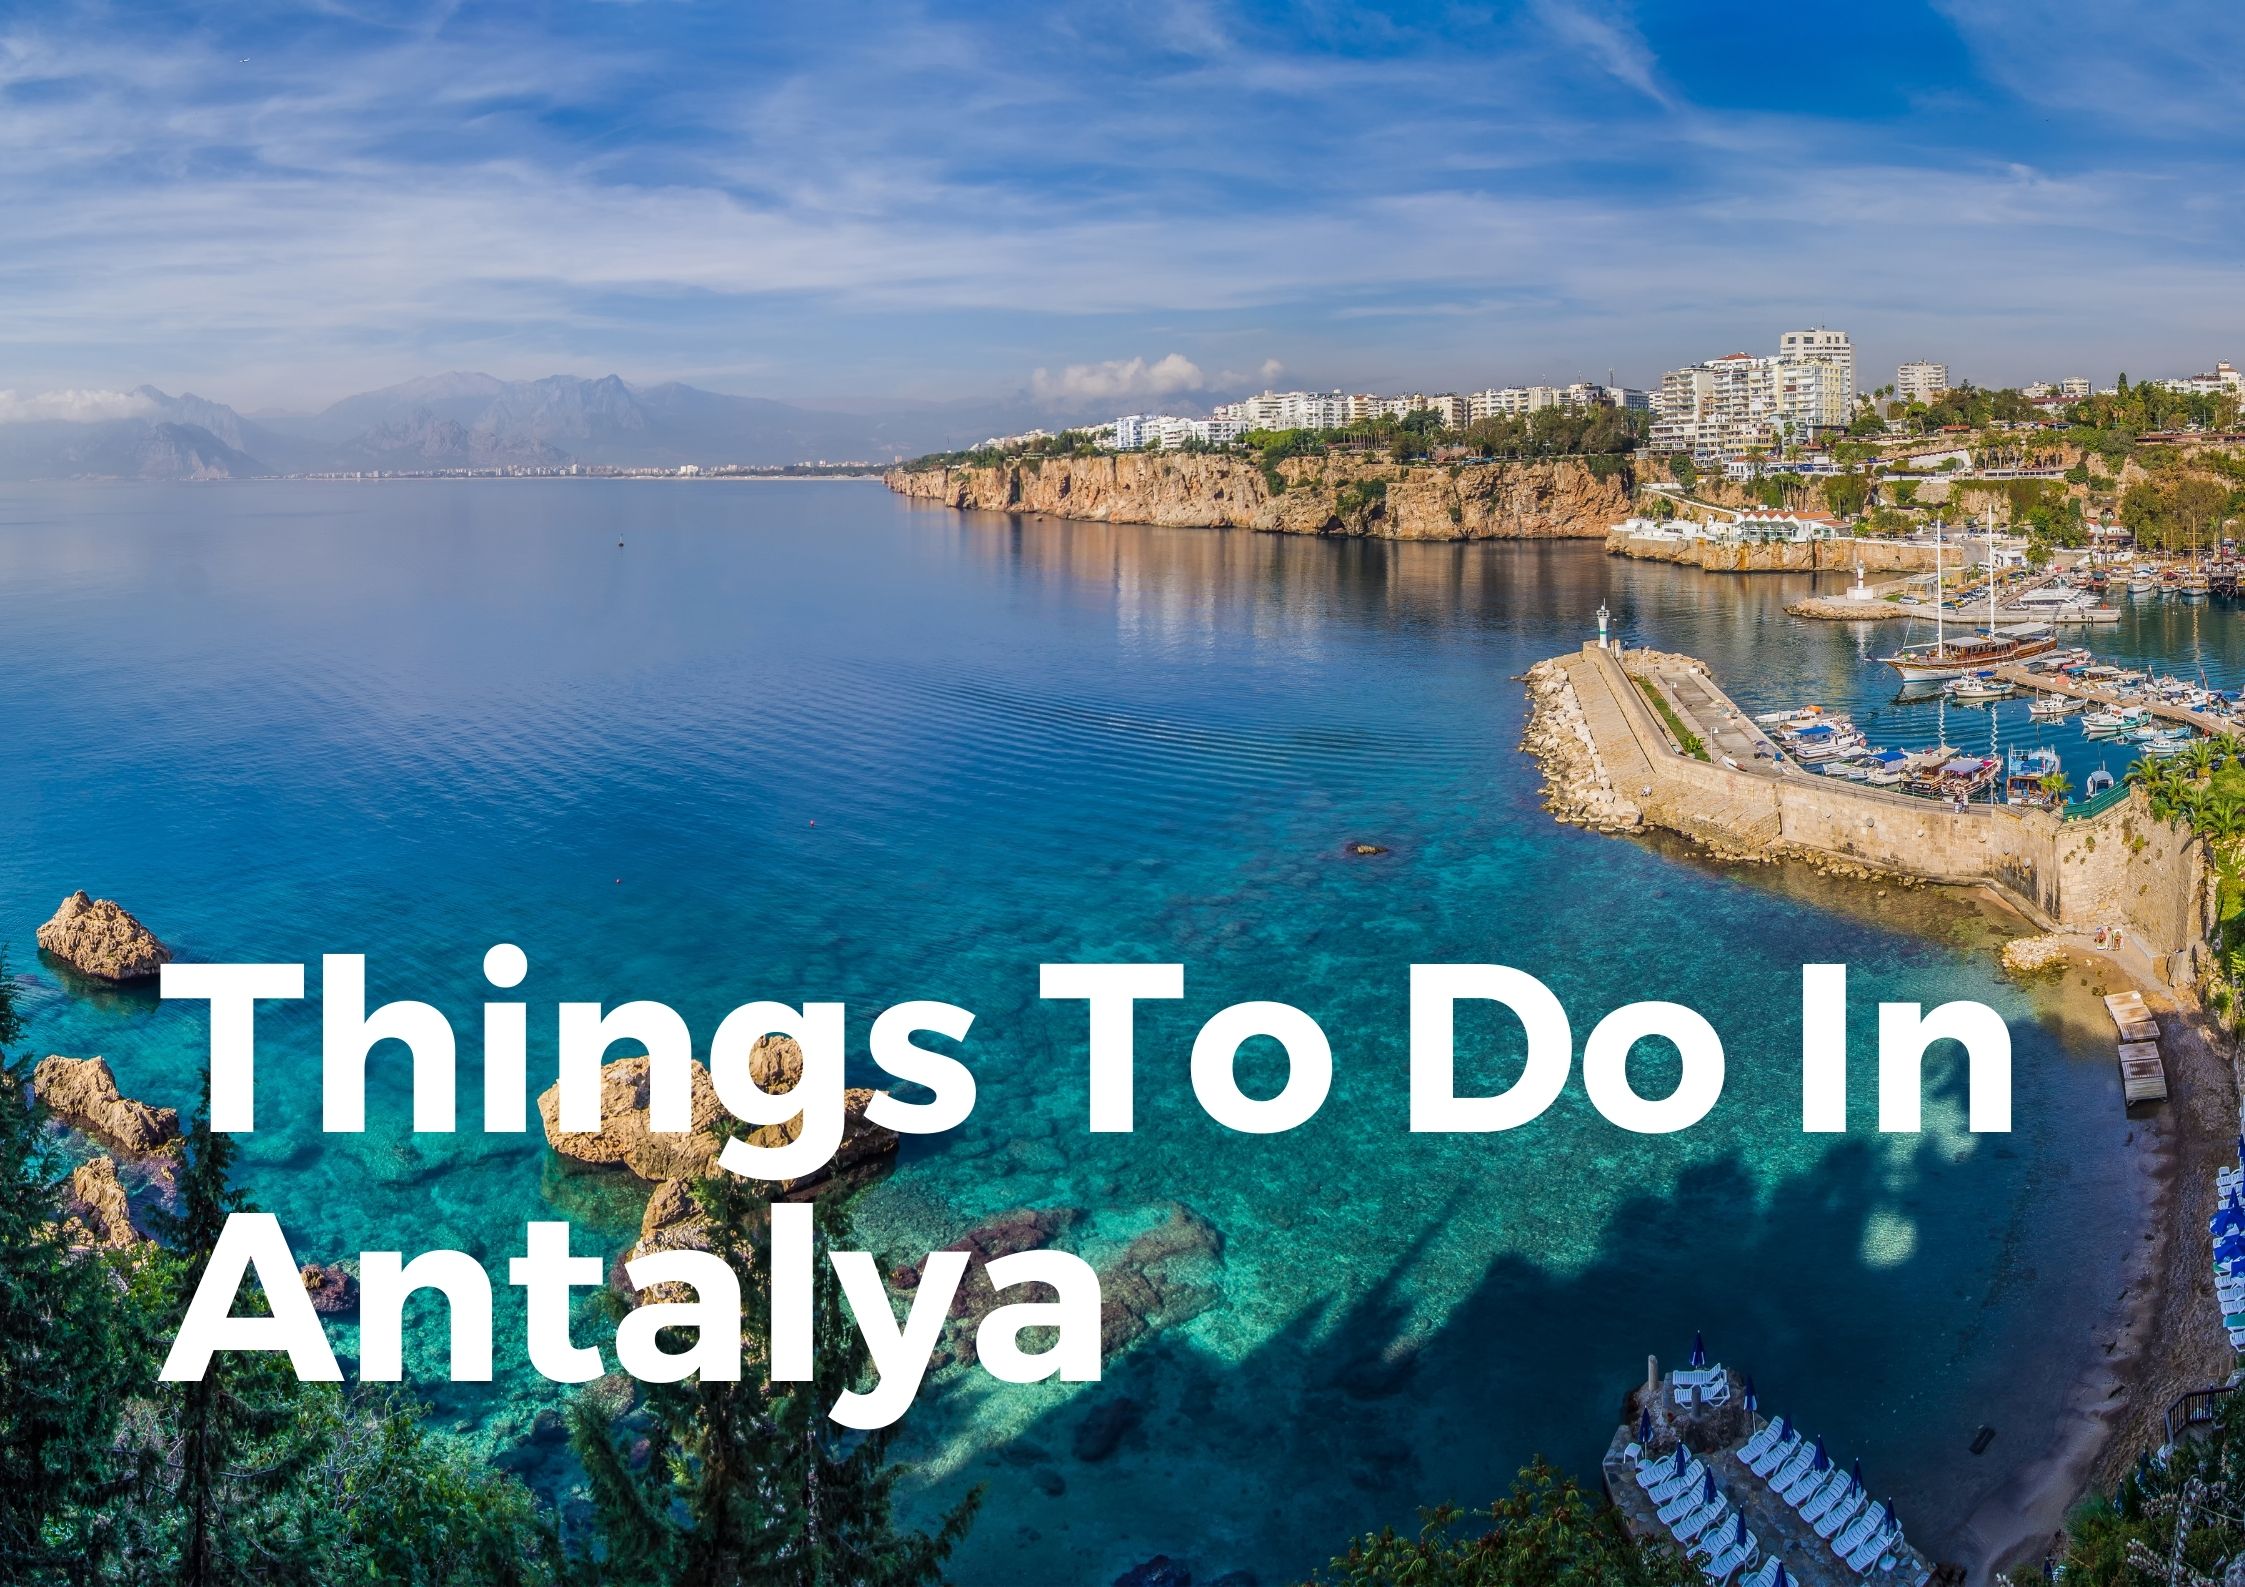 Things to do in Antalya